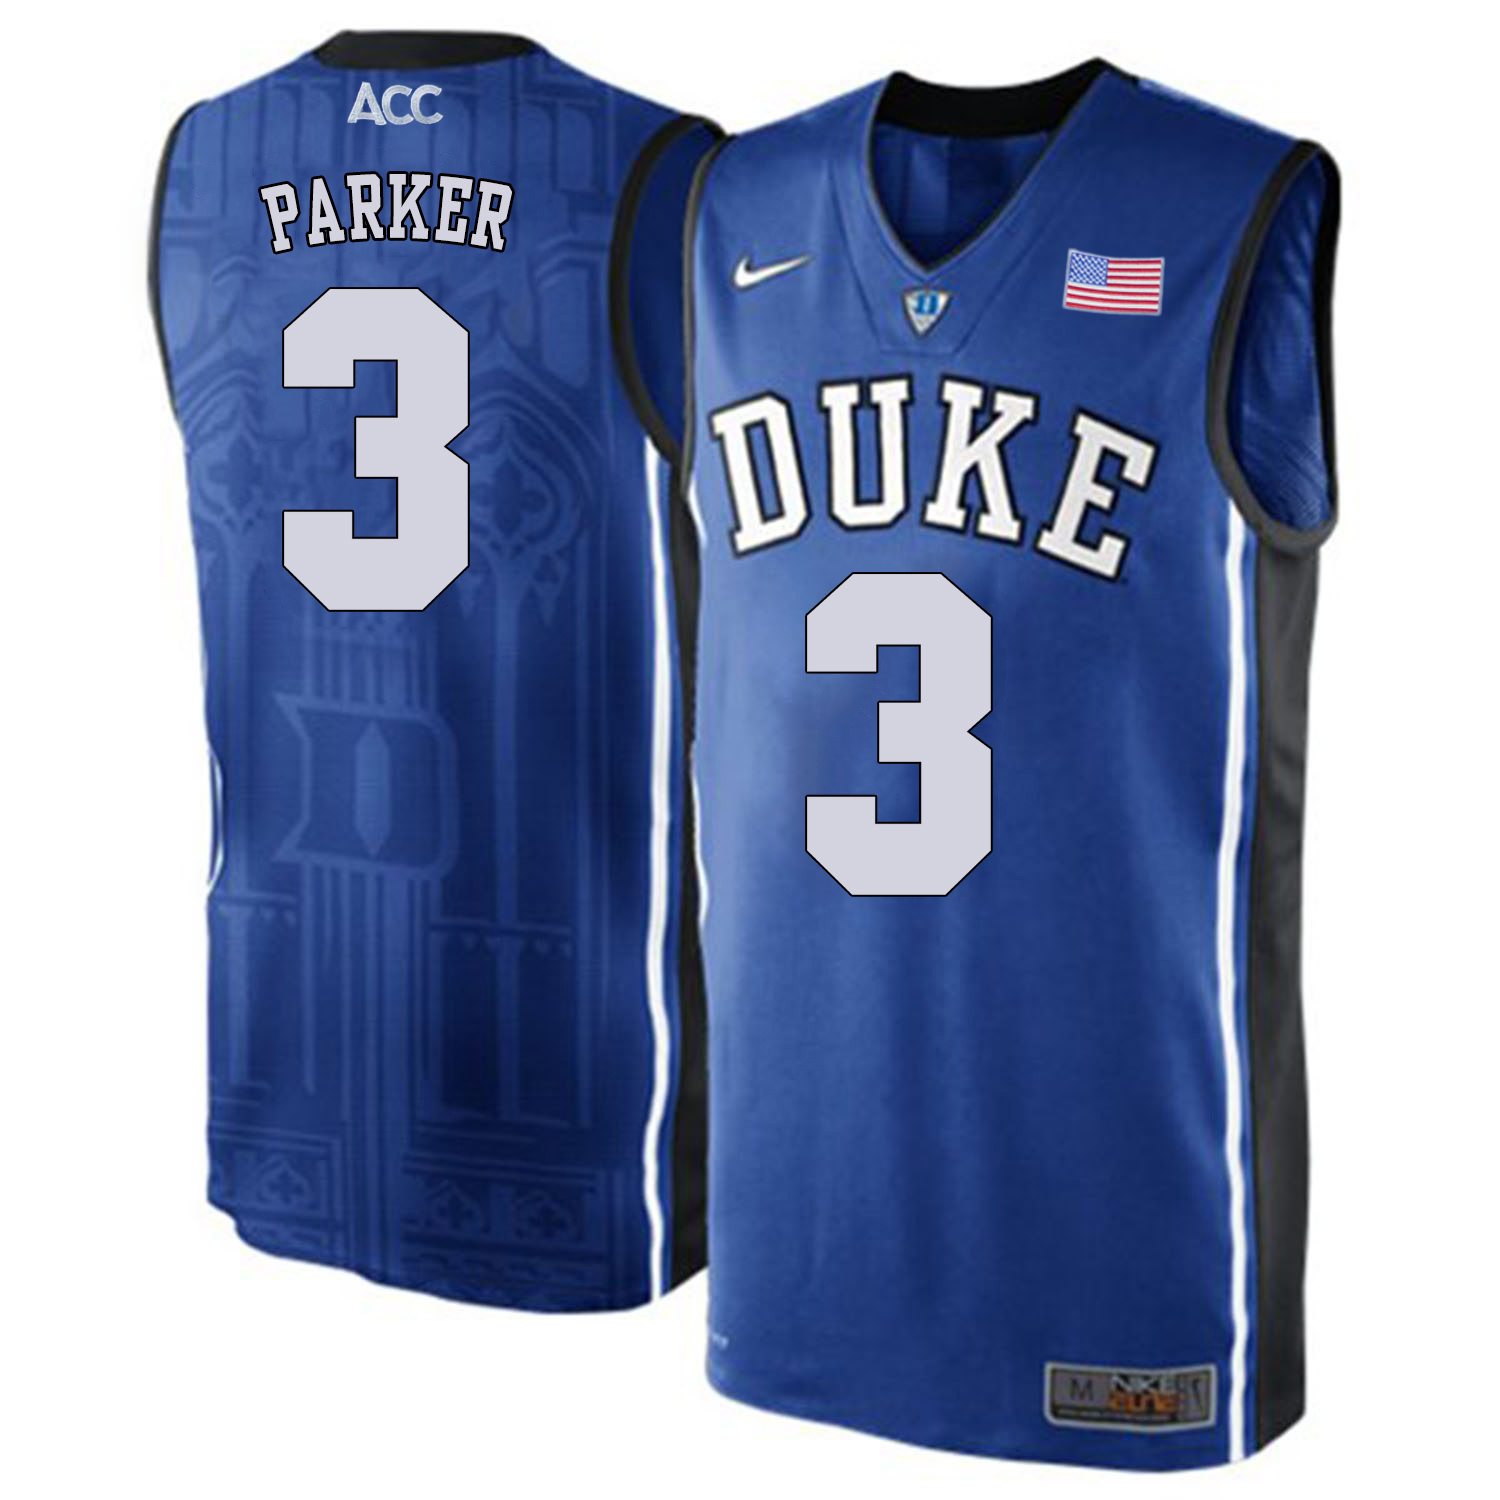 Duke Blue Devils 3 Jabari Parker Blue College Basketball Elite Jersey